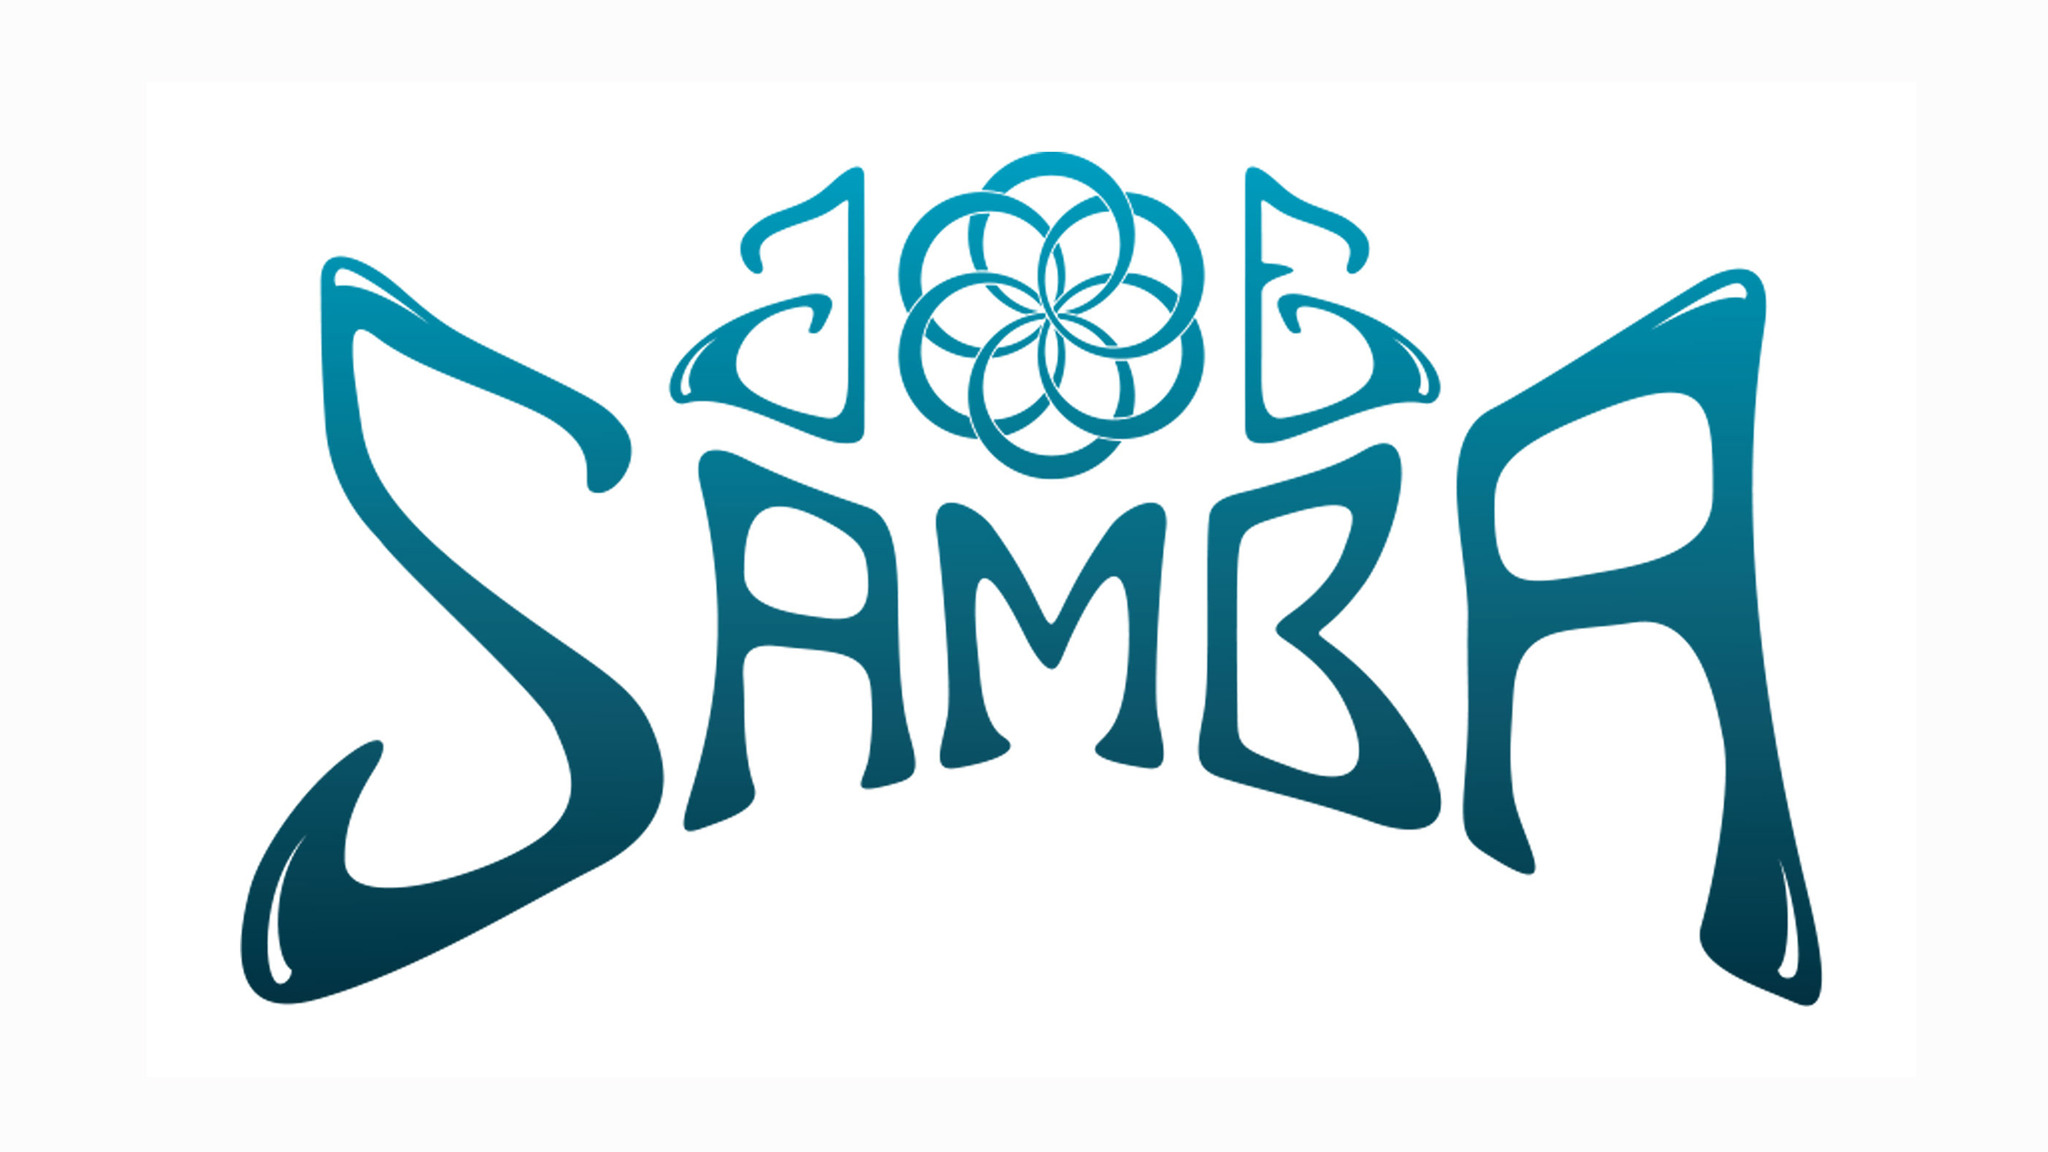 joe samba tour 2022